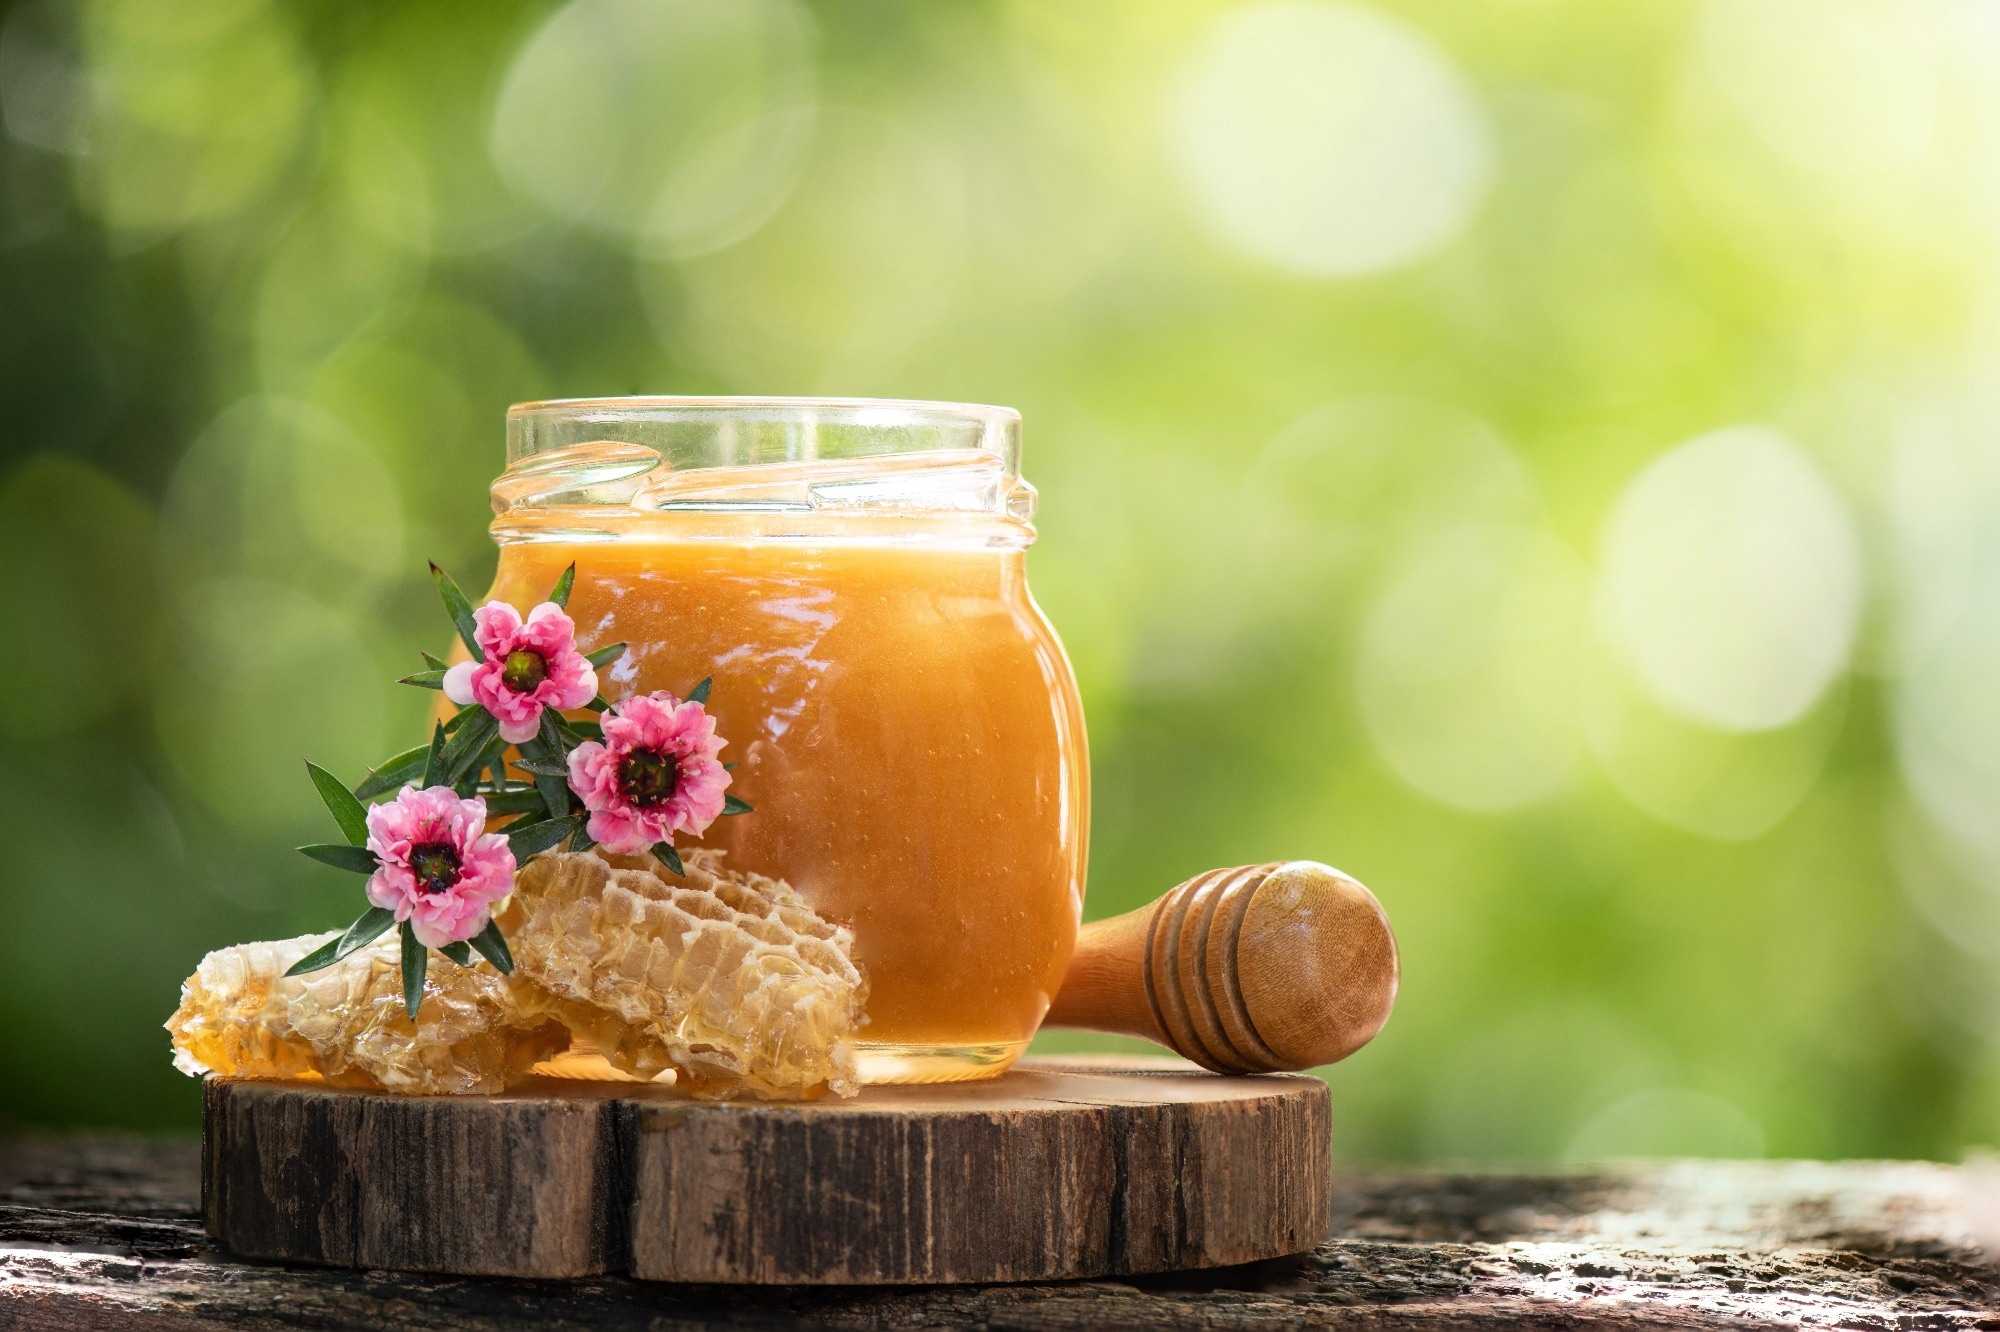 Study: Antibacterial activity of Hungarian varietal honeys against respiratory pathogens as a function of storage time. Image Credit: wasanajai / Shutterstock.com